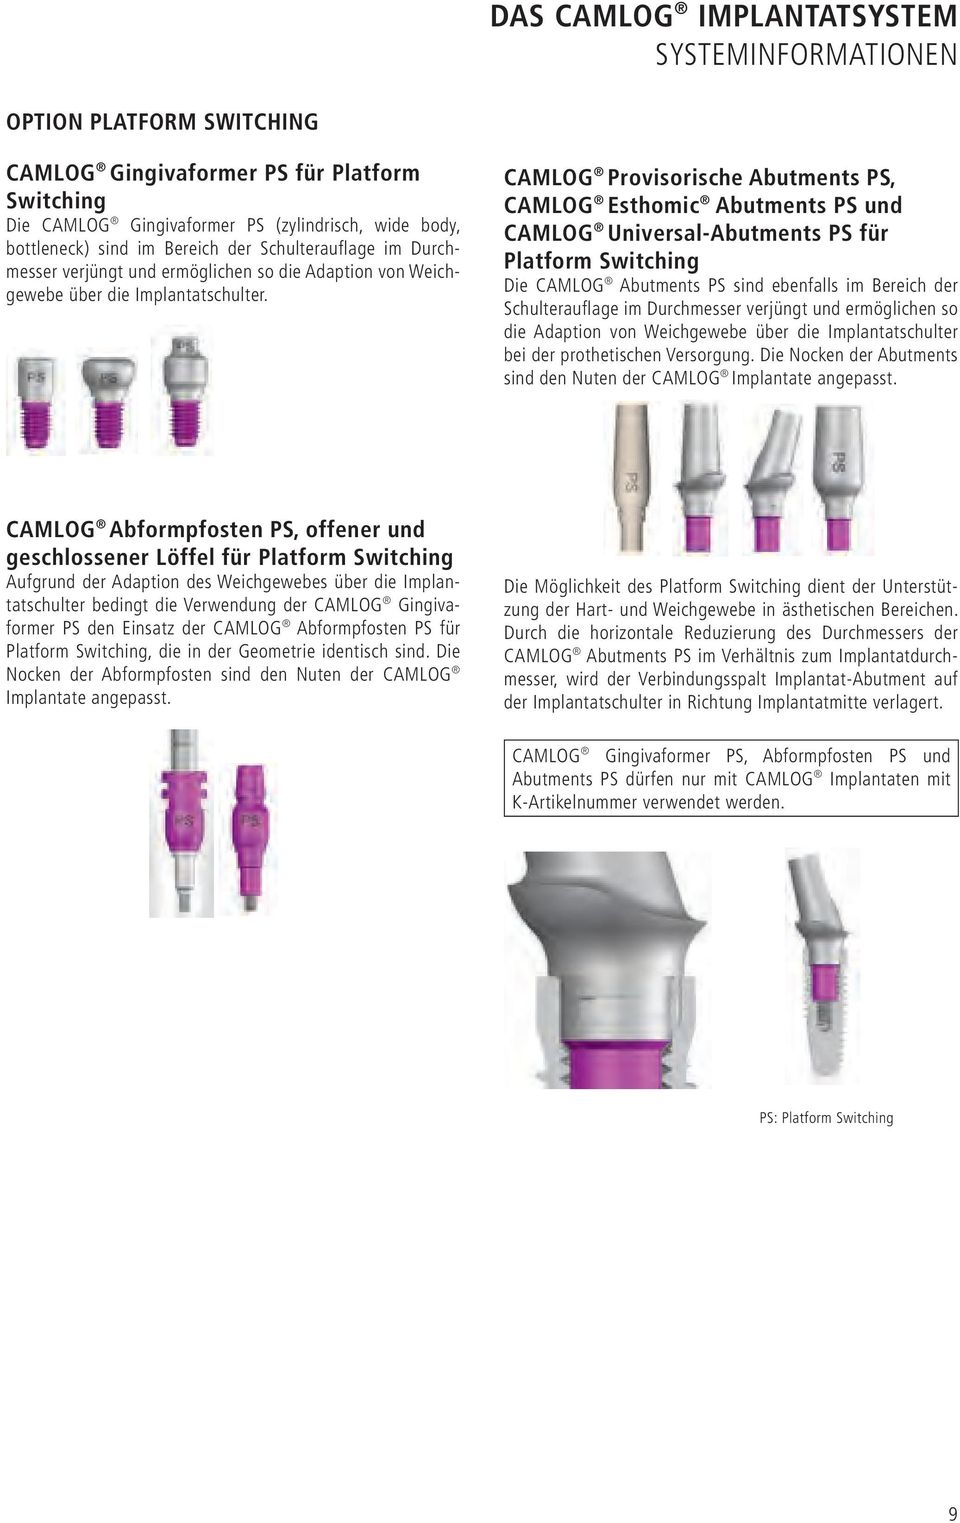 Camlog Implantatsystem Produktkatalog 2015 Deutschland Produkt Katalog Pdf Free Download